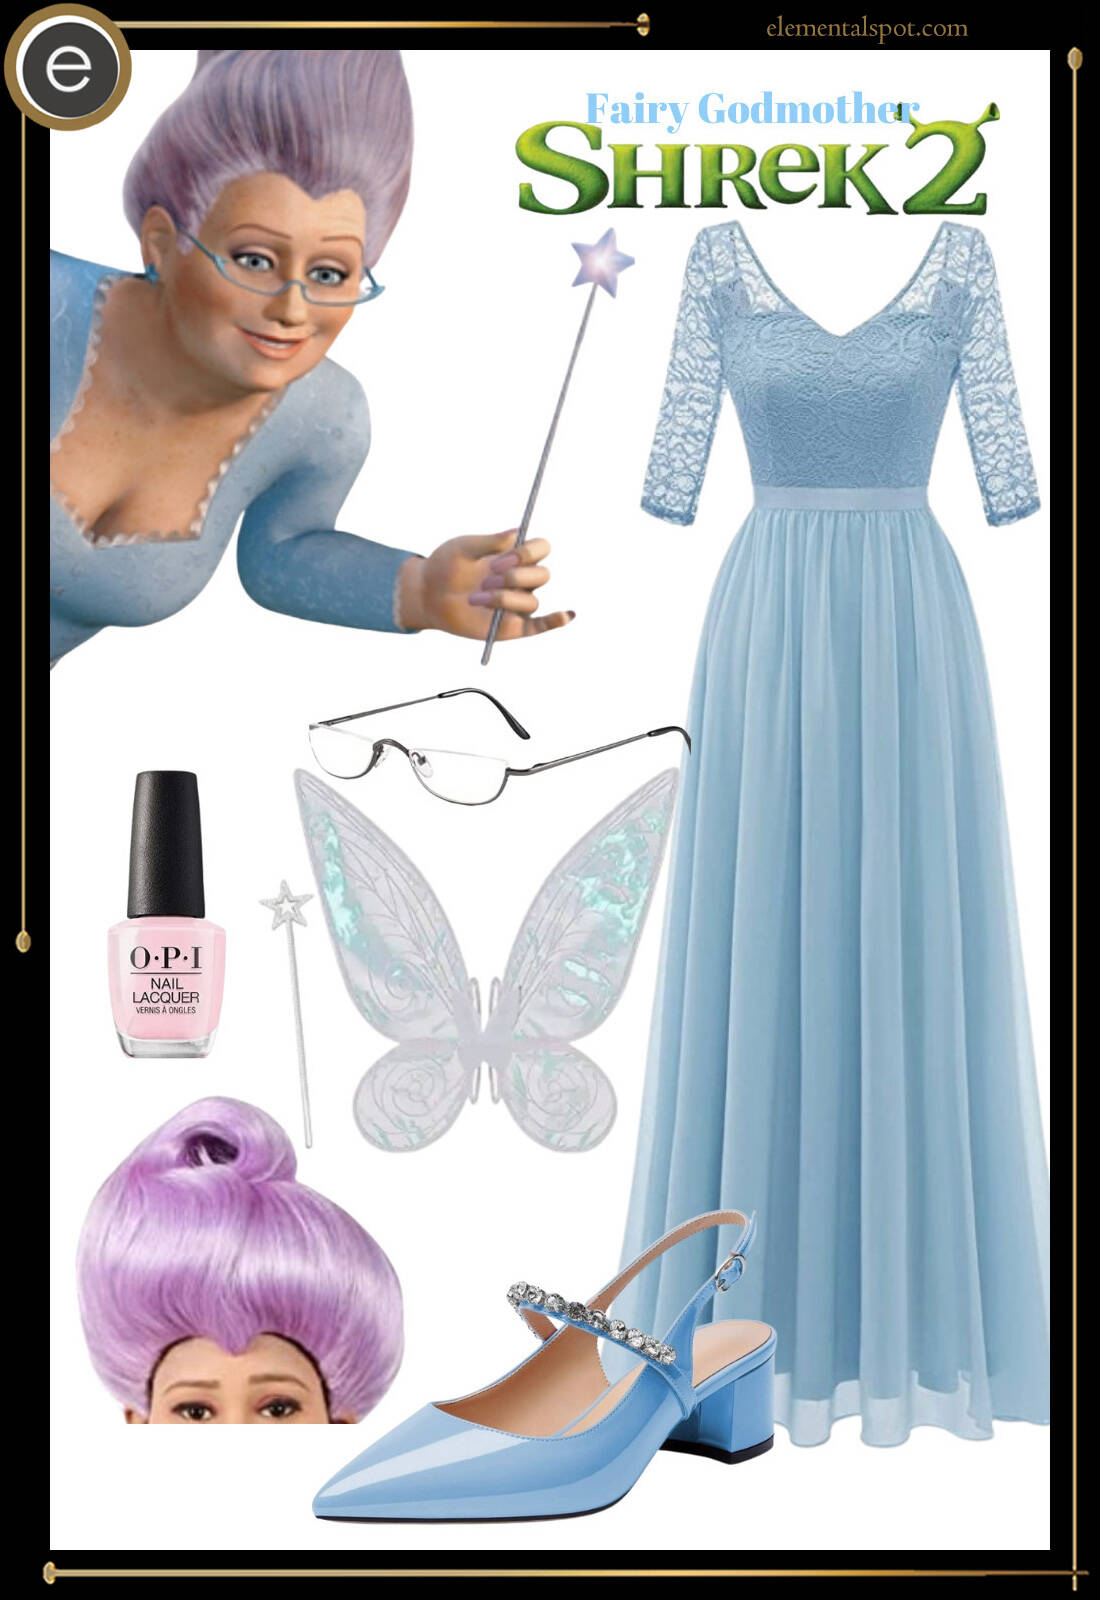 Dress Up Like Fairy Godmother from Shrek 2 - Elemental Spot